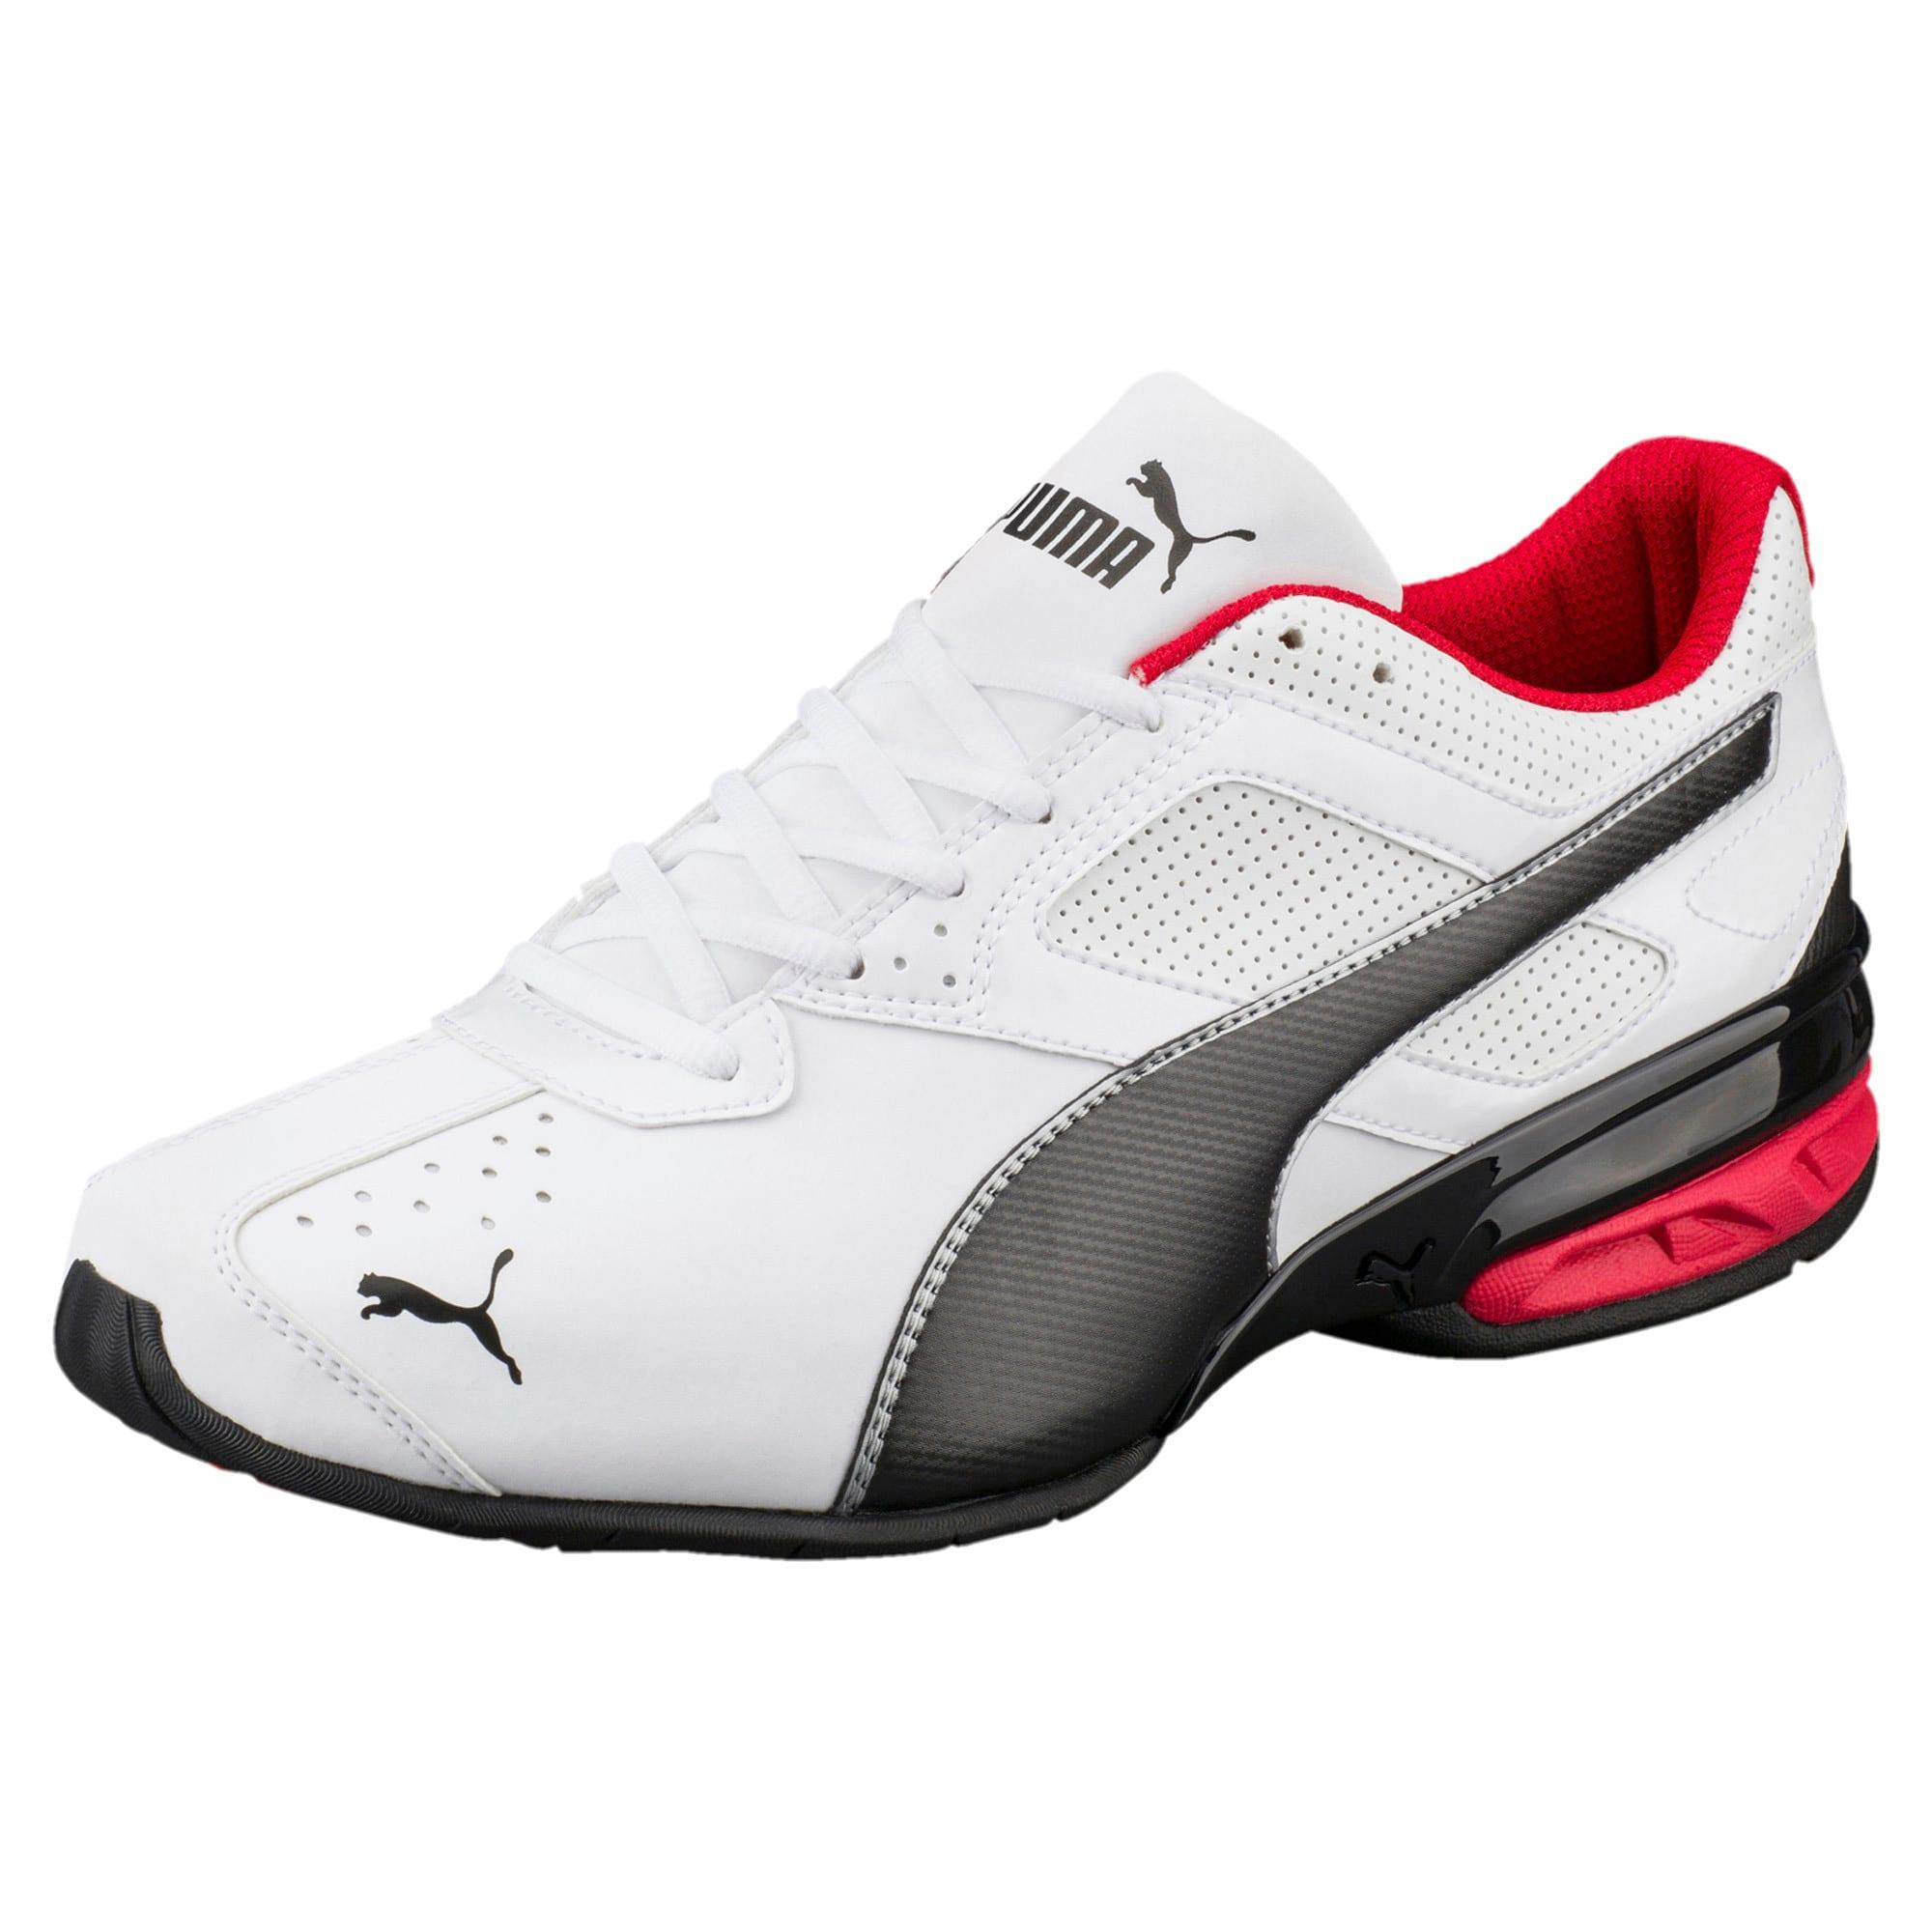 PUMA Synthetic Tazon 6 Fm Men's Sneakers in White for Men - Lyst